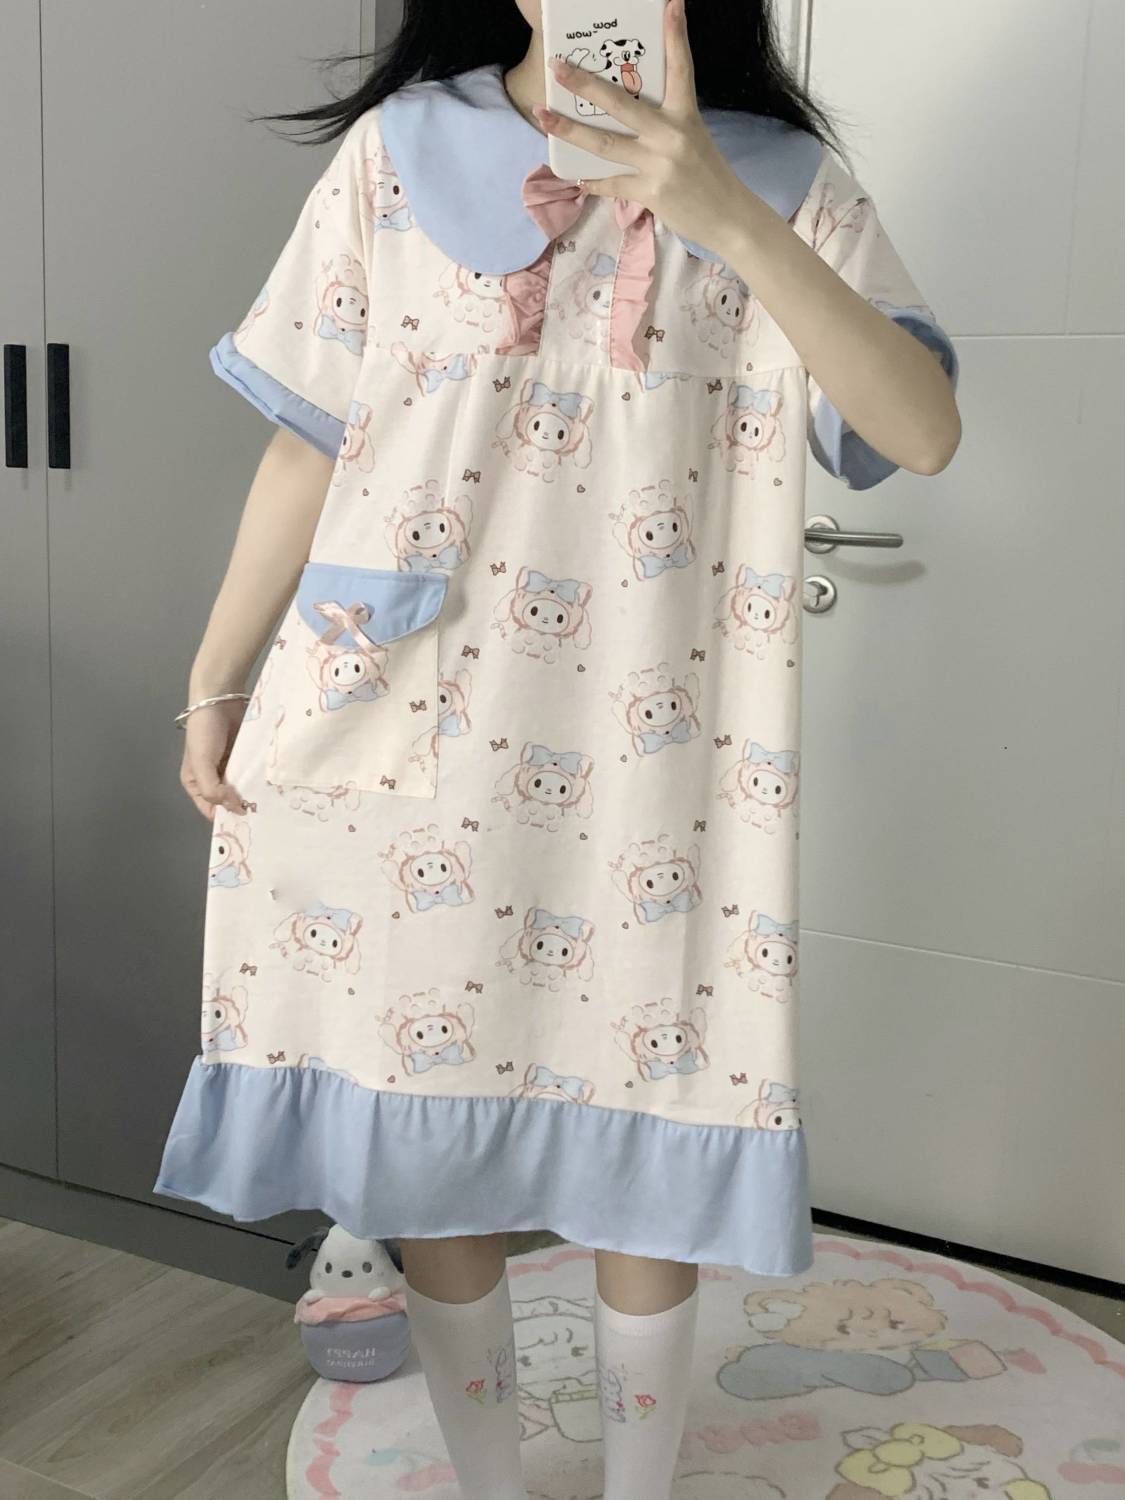 Melody nightdress women's summer new doll collar short-sleeved loose cute cartoon pajamas home clothes dress